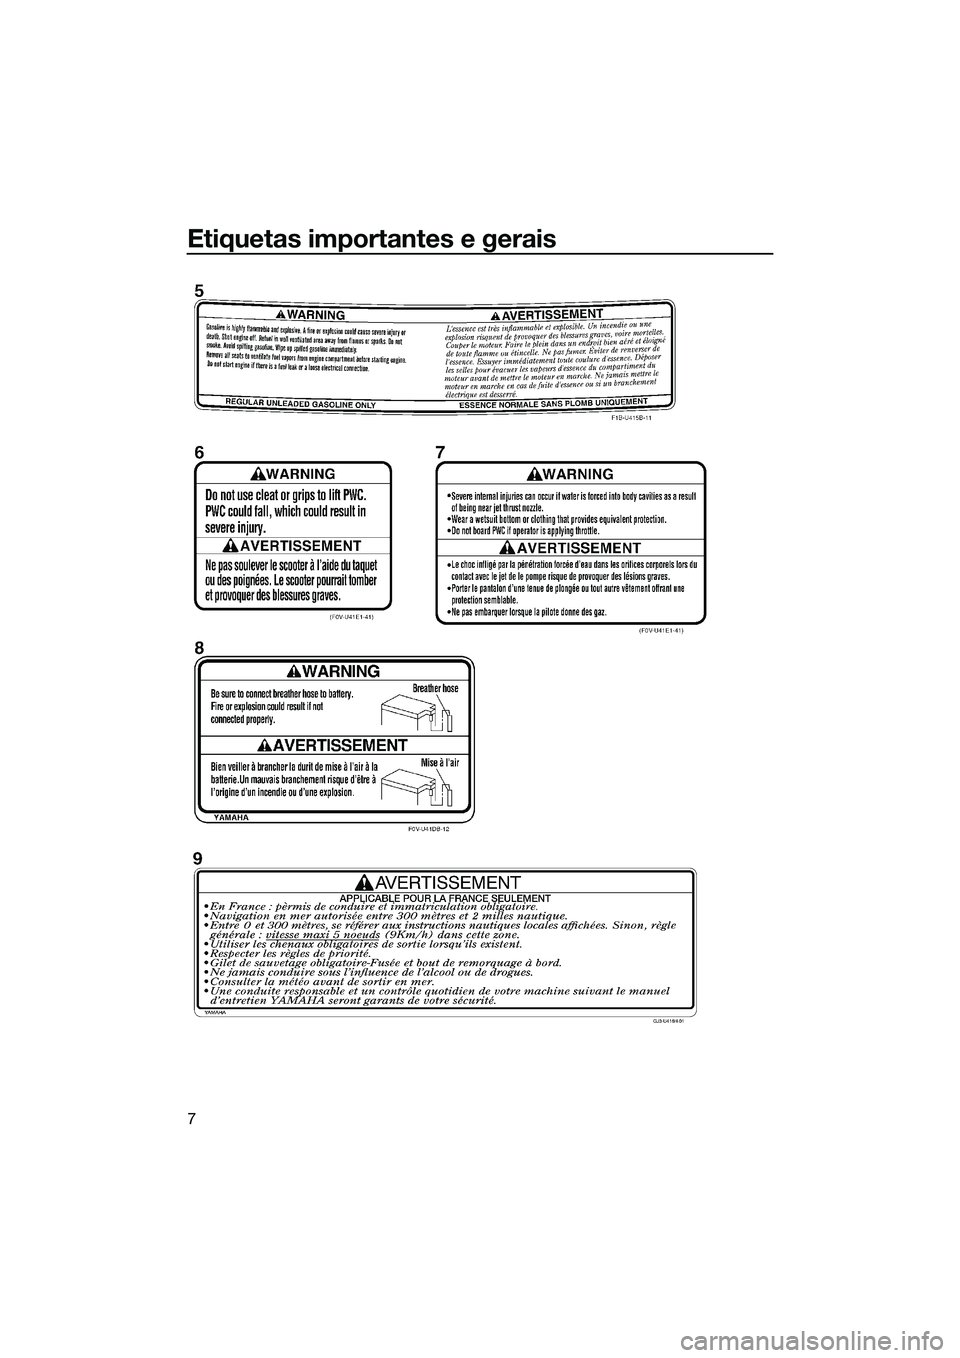 YAMAHA V1 2015  Manual de utilização (in Portuguese) Etiquetas importantes e gerais
7
UF2P72P0.book  Page 7  Monday, August 25, 2014  2:33 PM 